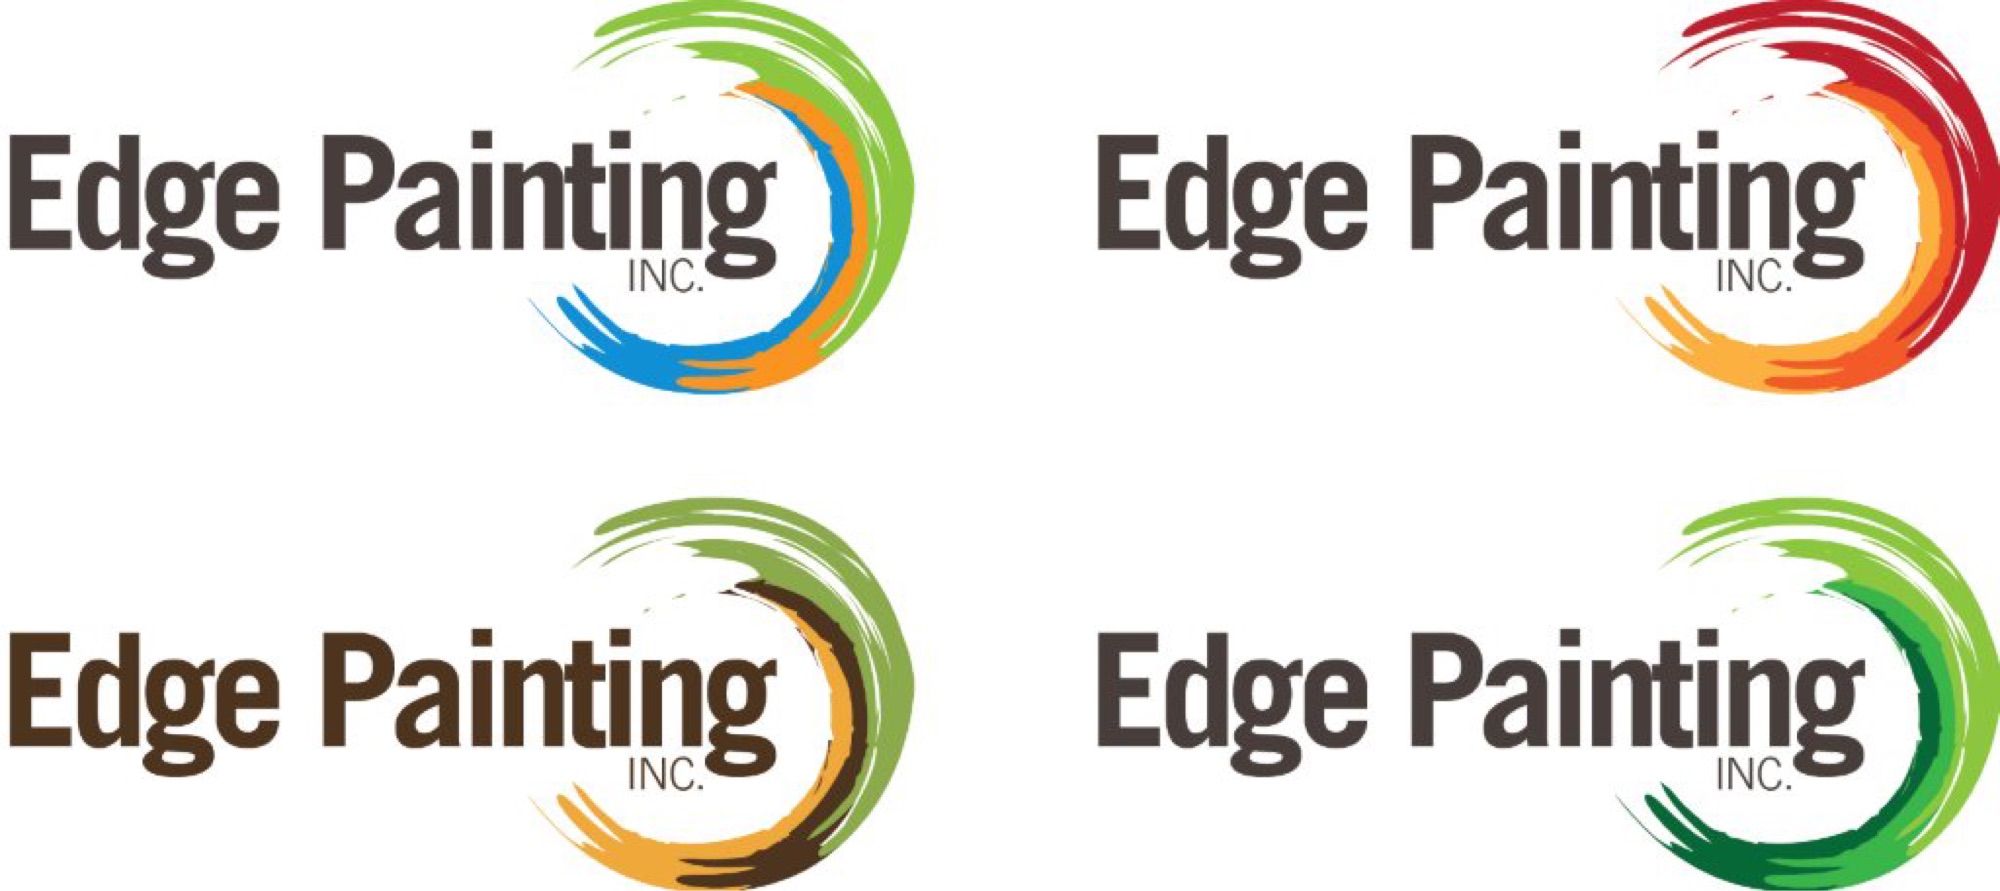 Edge Painting, Inc. Logo